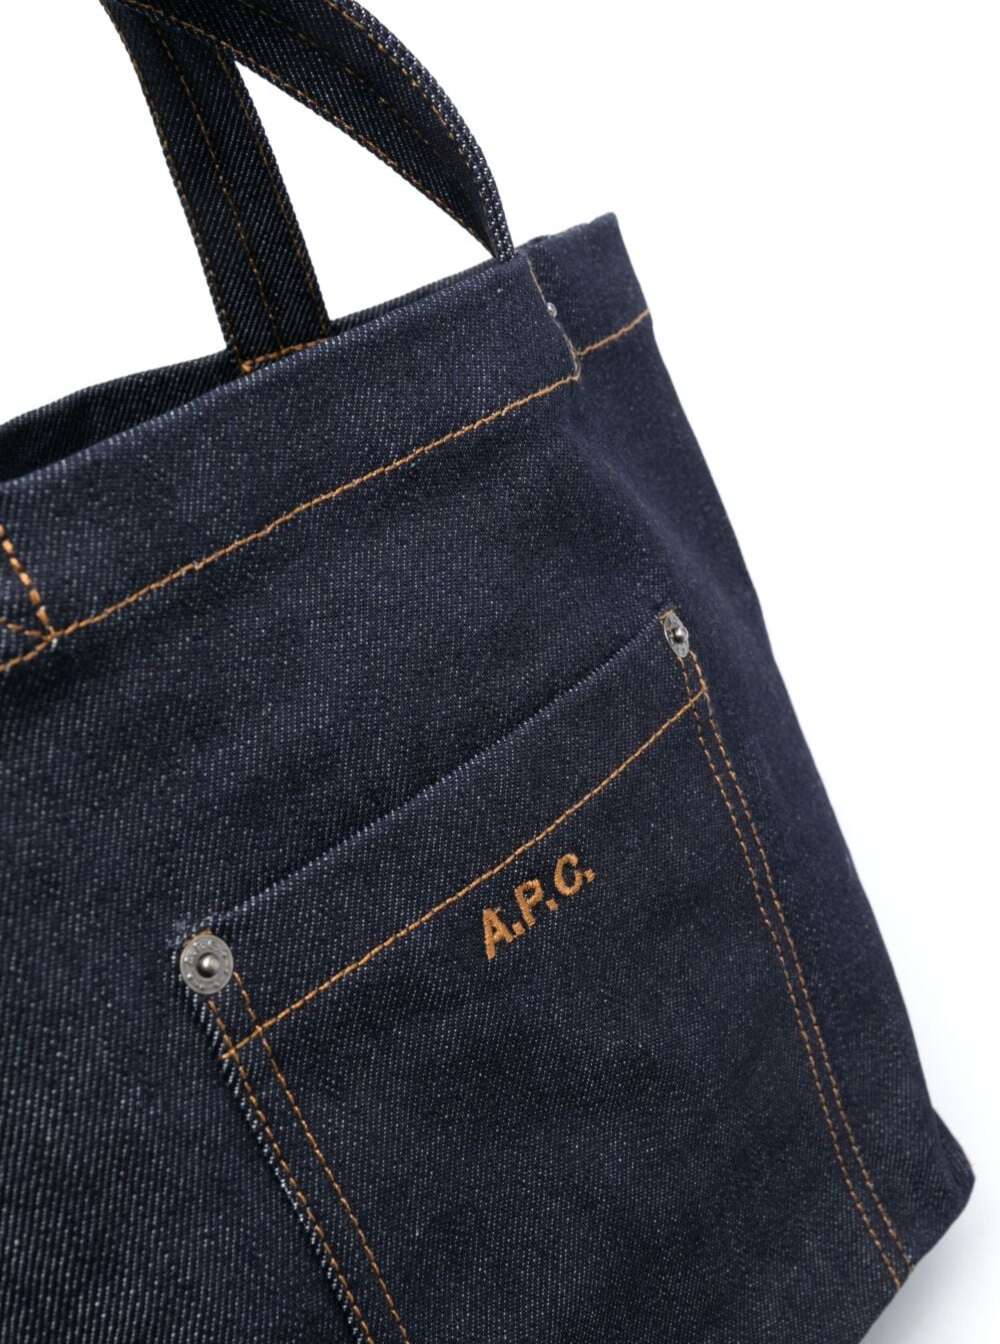 Shop Apc Blue Hand Bag With Patch Pocket Abd Patch Logo In Cotton Denim Woman